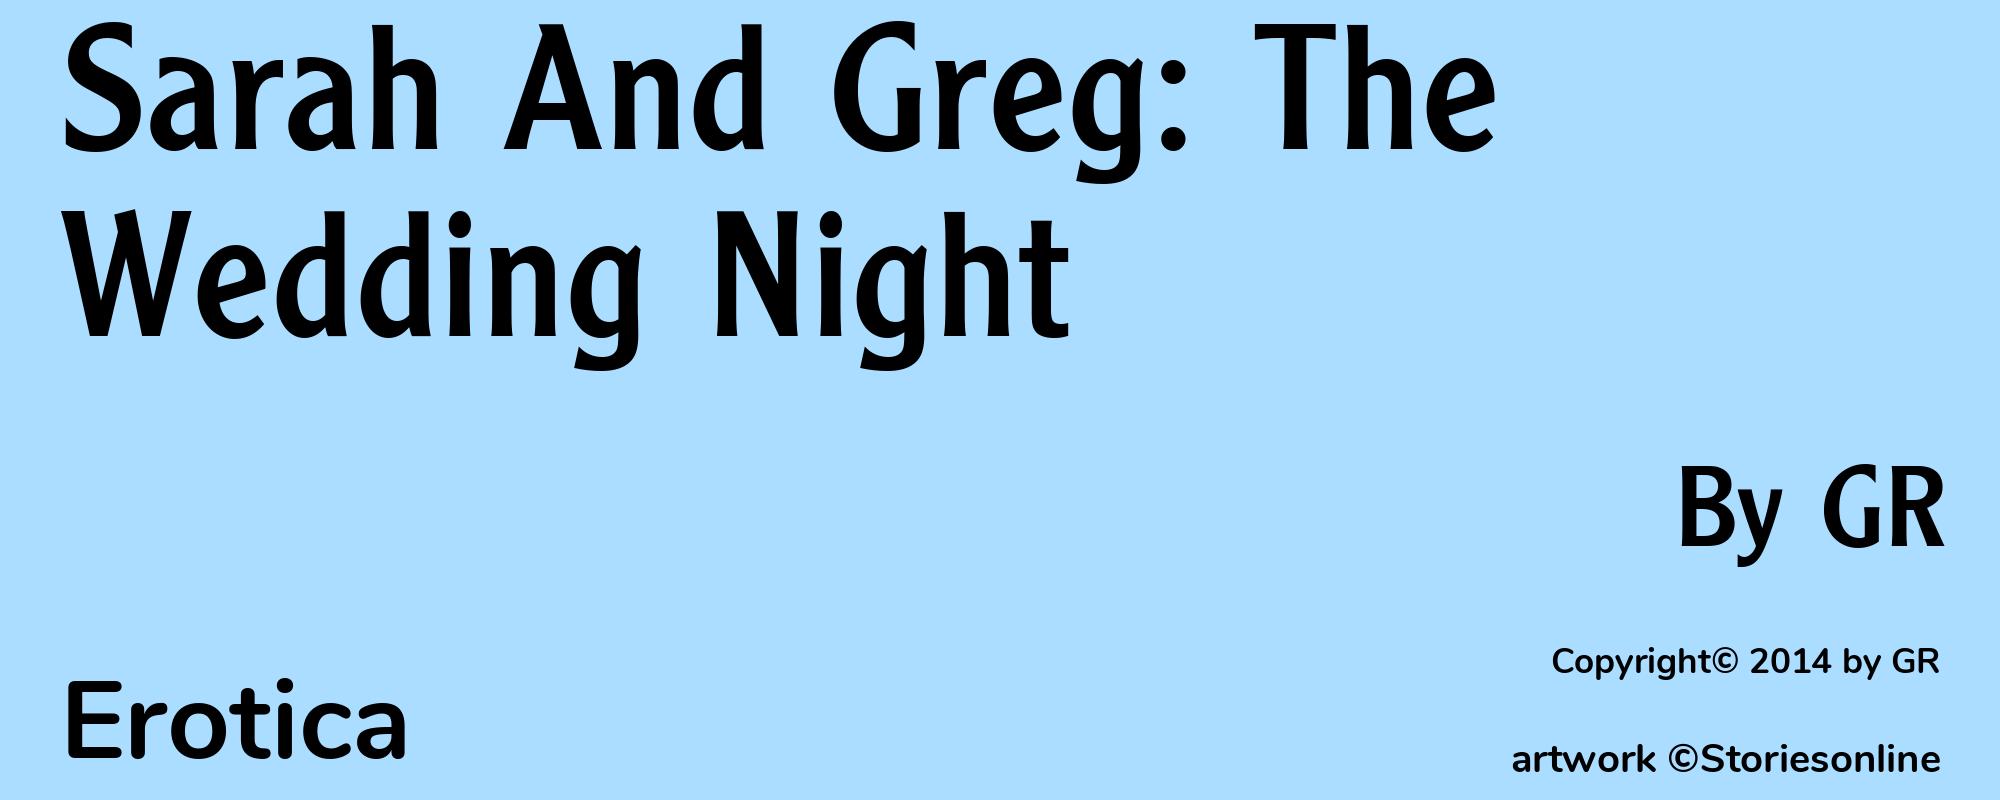 Sarah And Greg: The Wedding Night - Cover